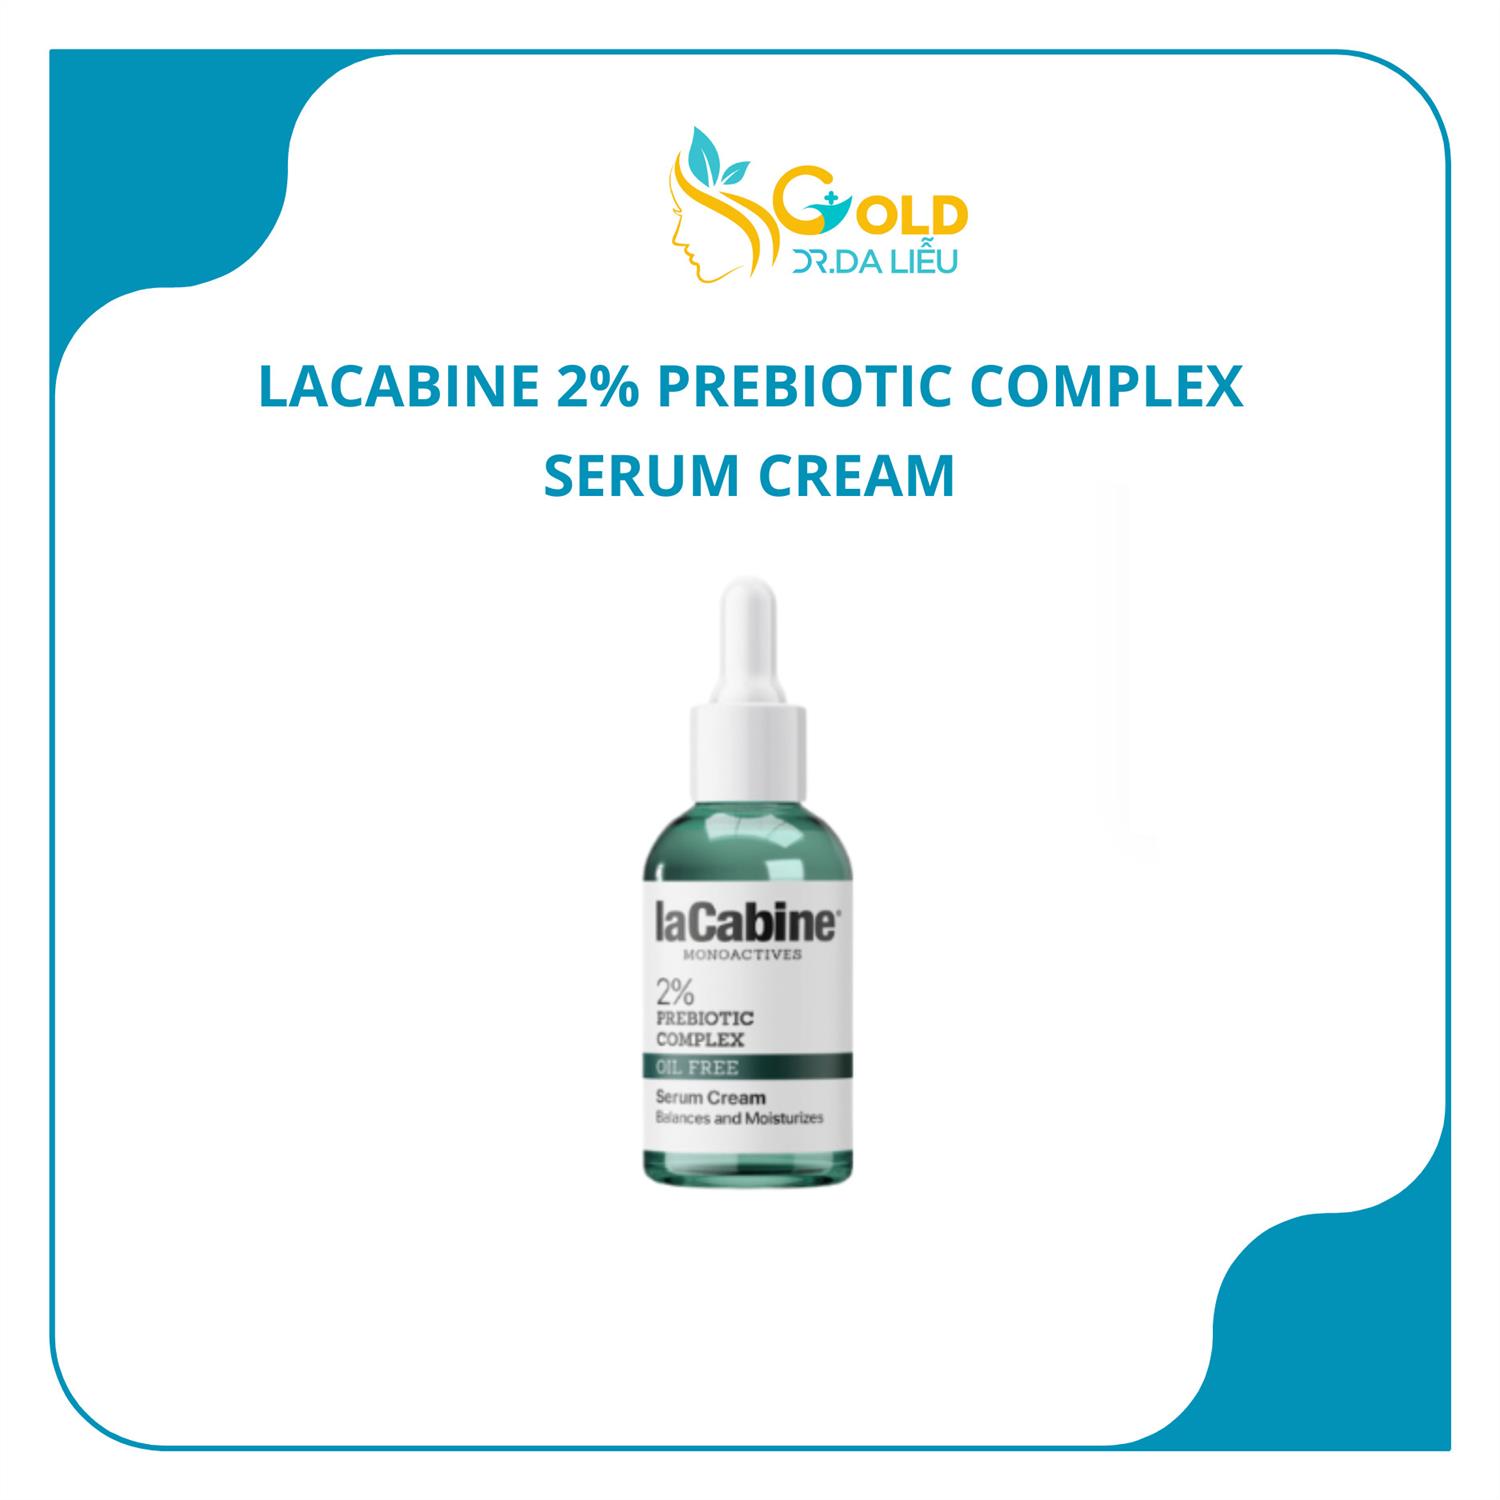 LaCabine 2% Prebiotic Complex Serum Cream